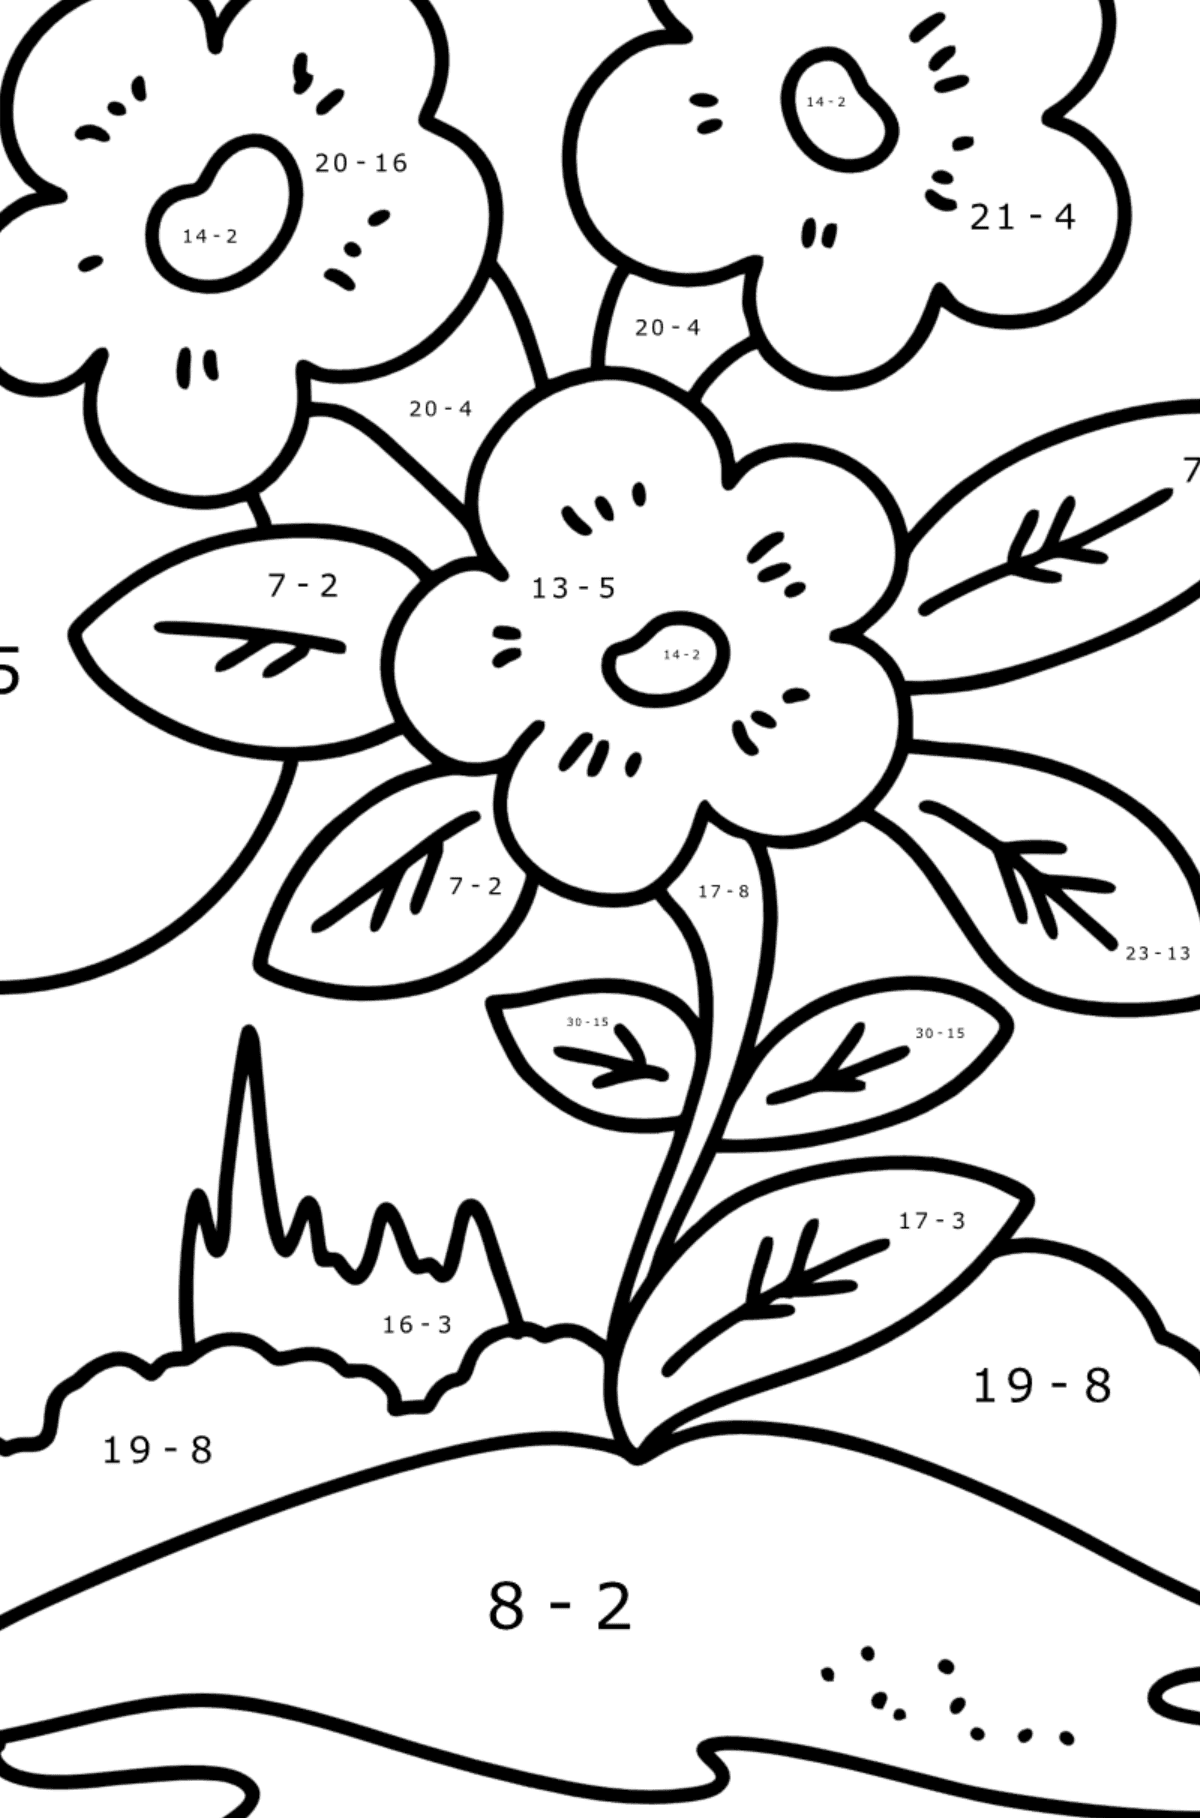 Mewarnai gambar bunga musim semi yang lucu - Pewarnaan Matematika: Pengurangan untuk anak-anak